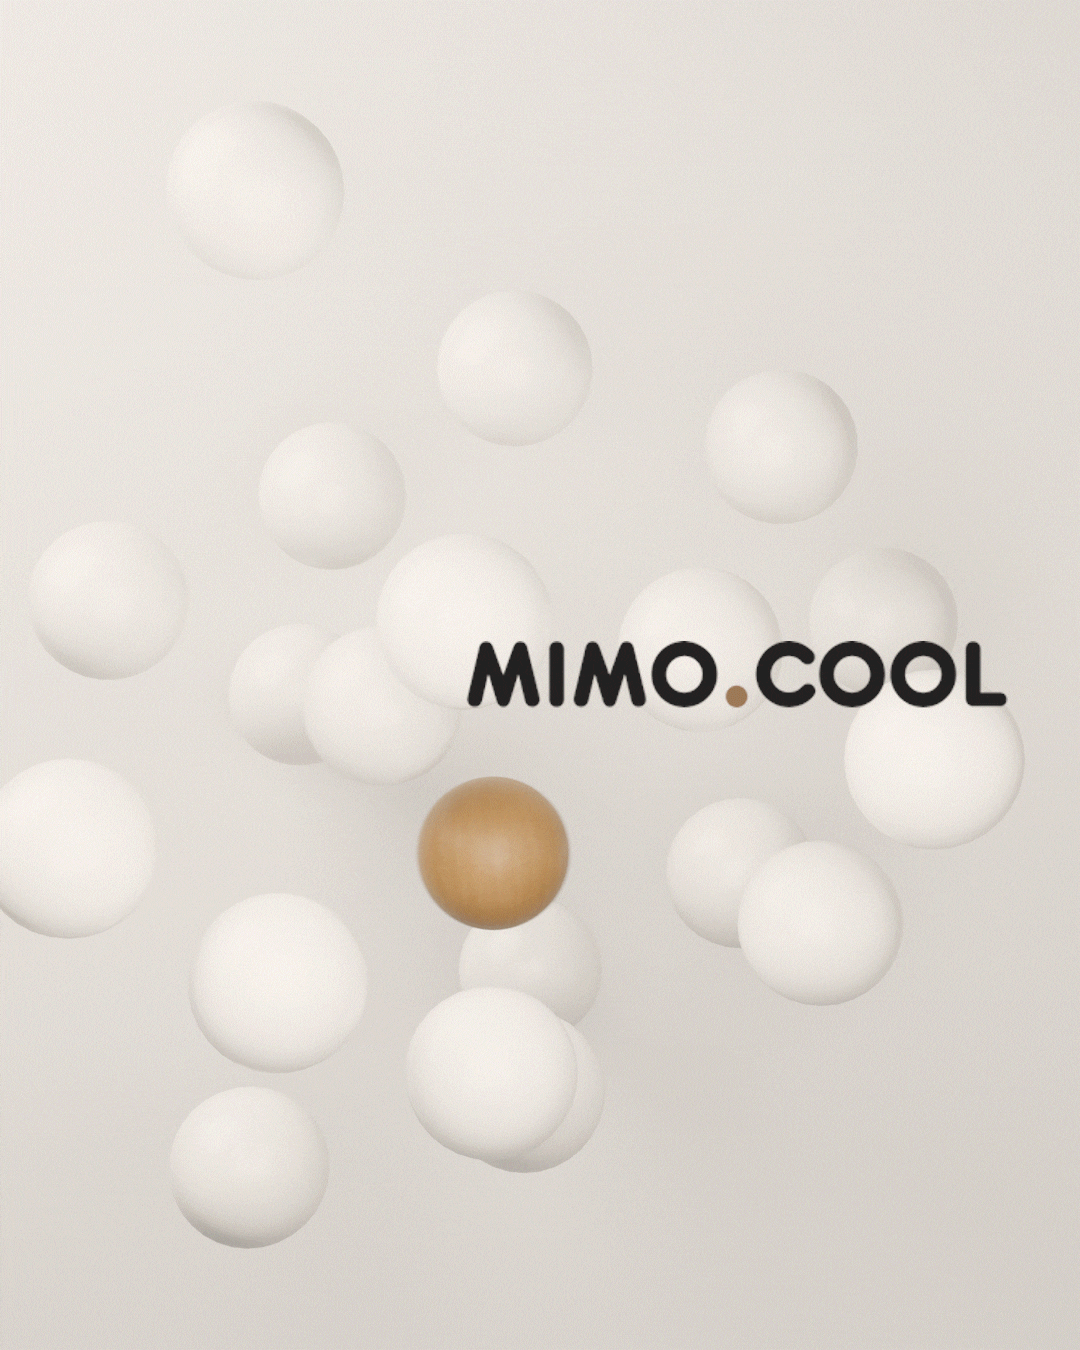 Mimo.Cool兒童時尚品牌形象設計